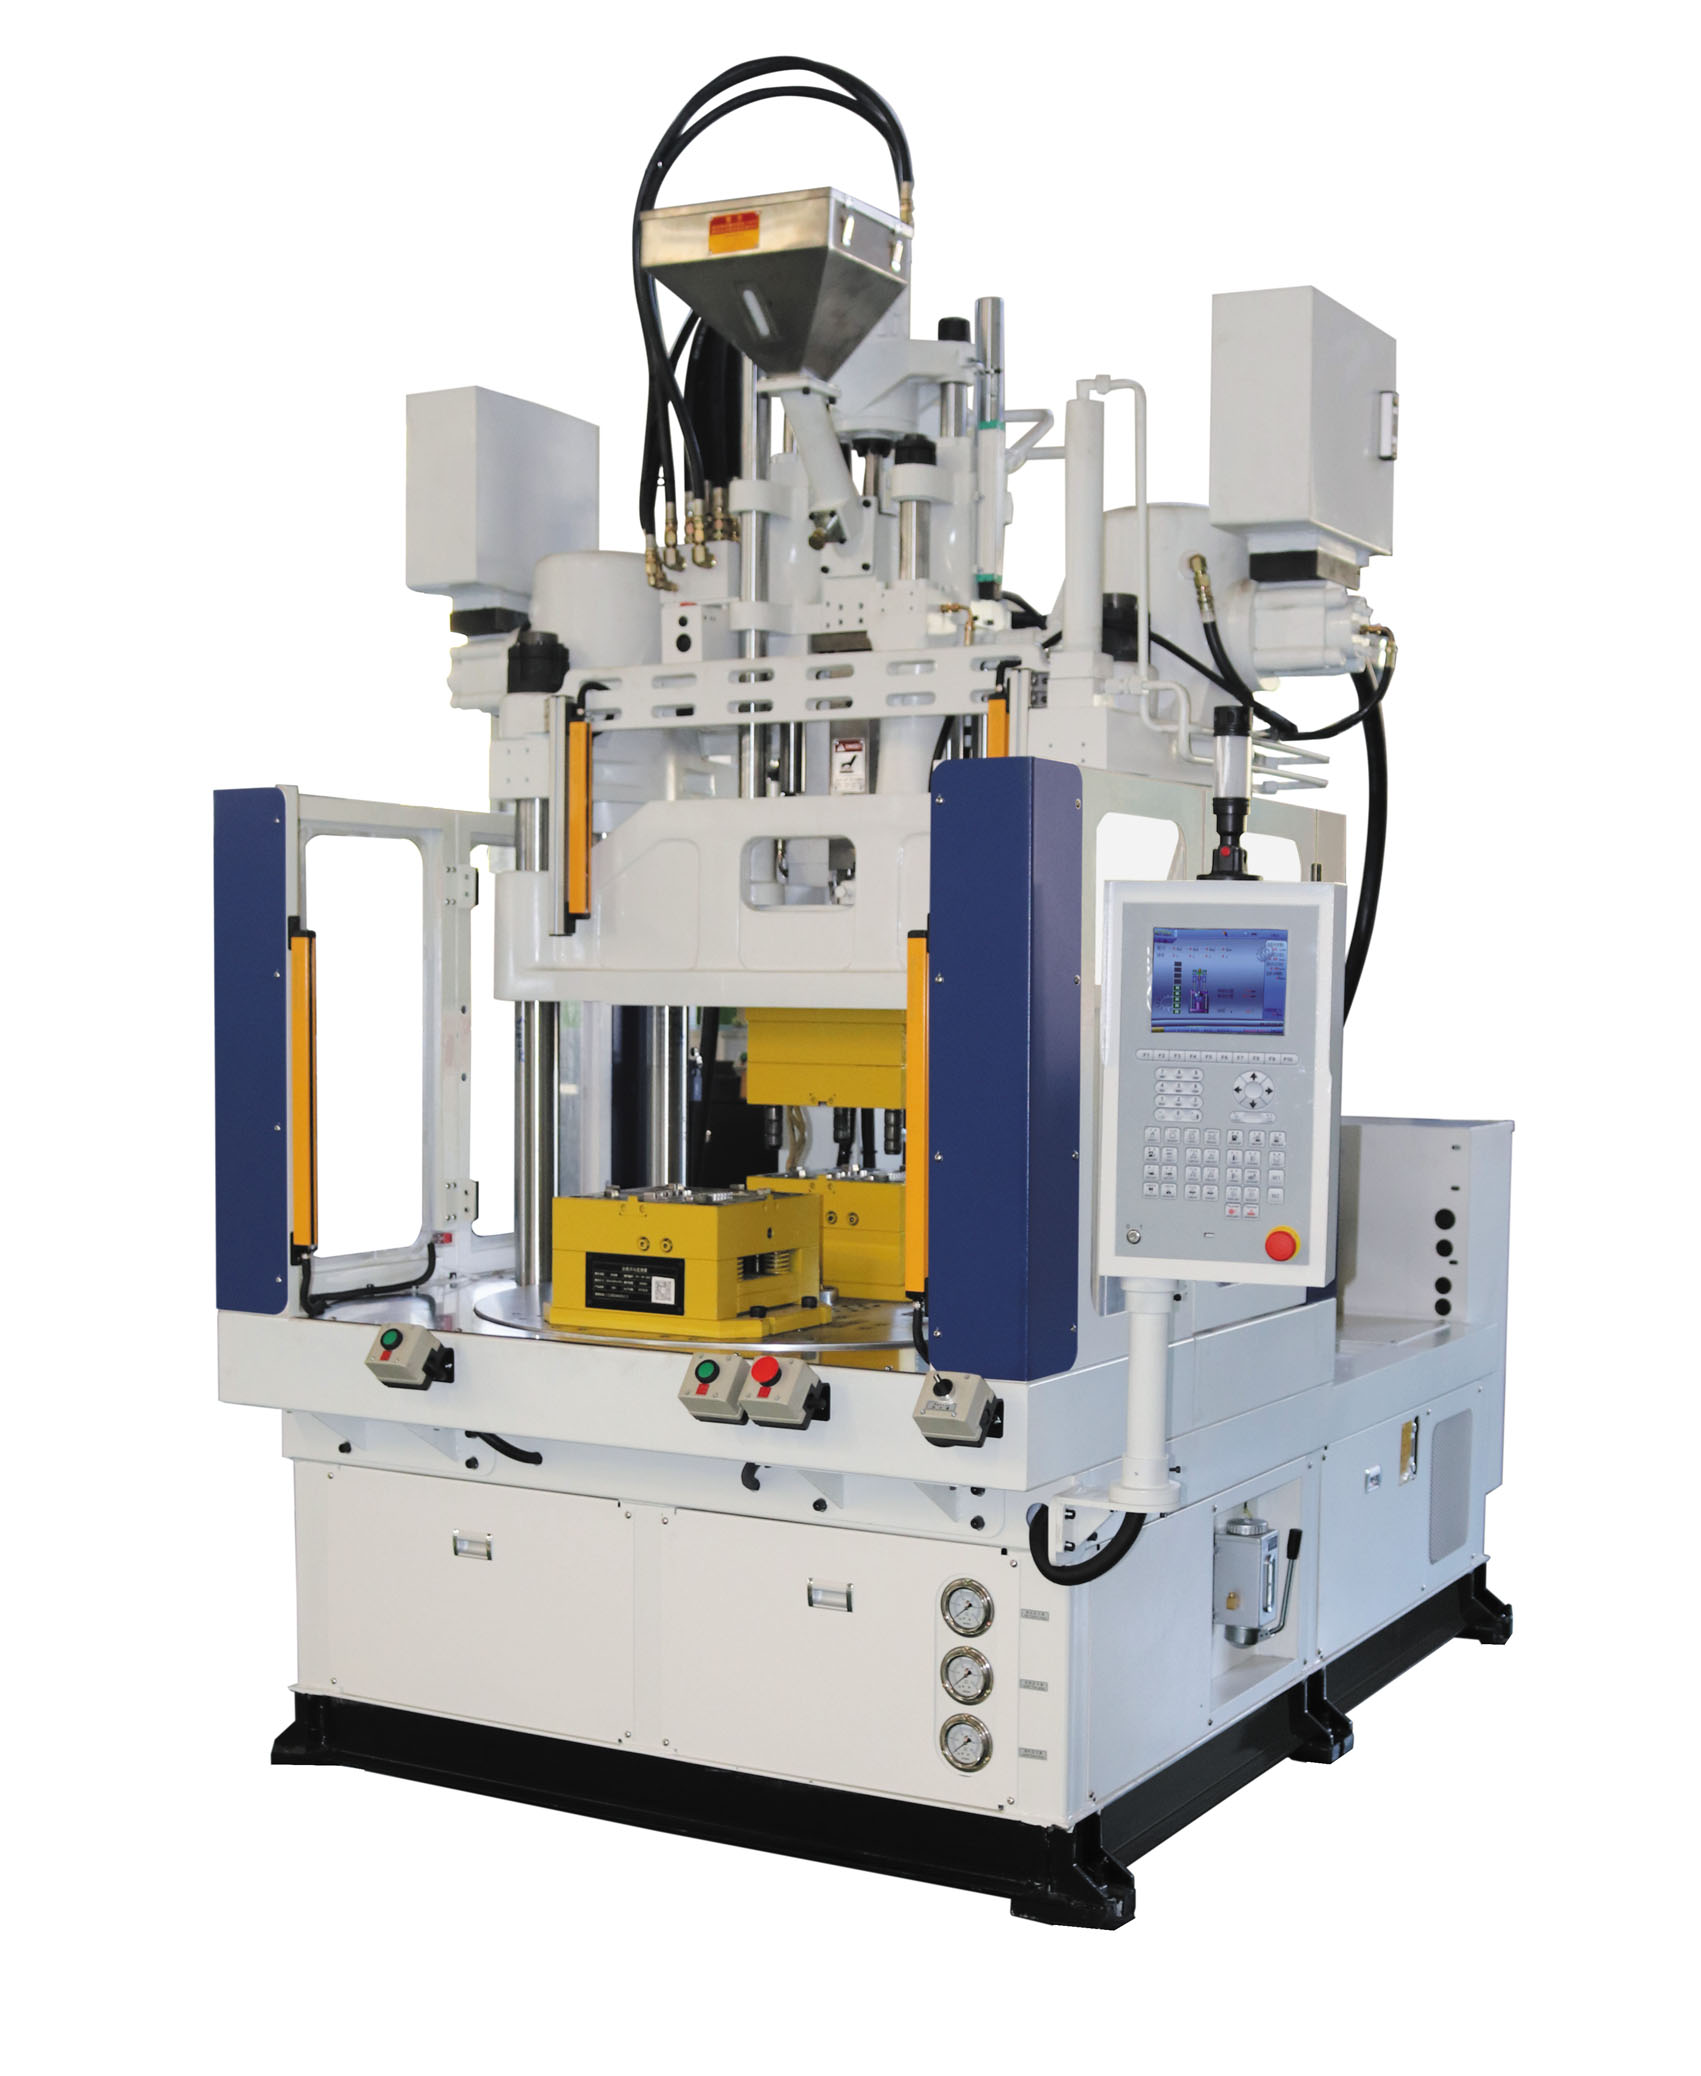 TYU-850.2R vertical injection molding machine